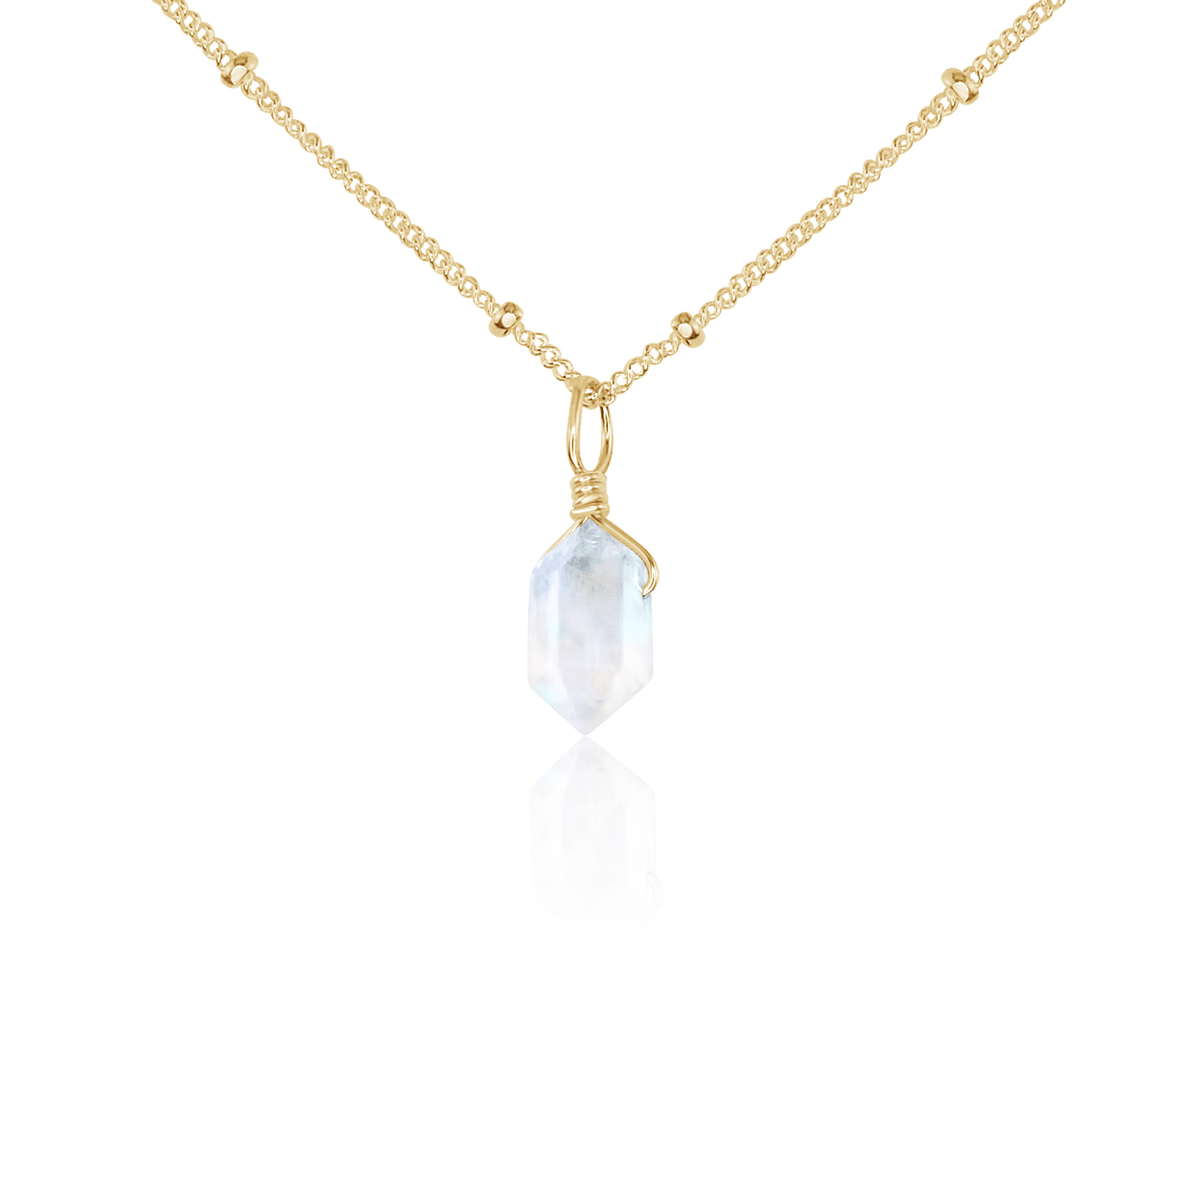 Double Terminated Crystal Pendant Necklace - Rainbow Moonstone - 14K Gold Fill Satellite - Luna Tide Handmade Jewellery